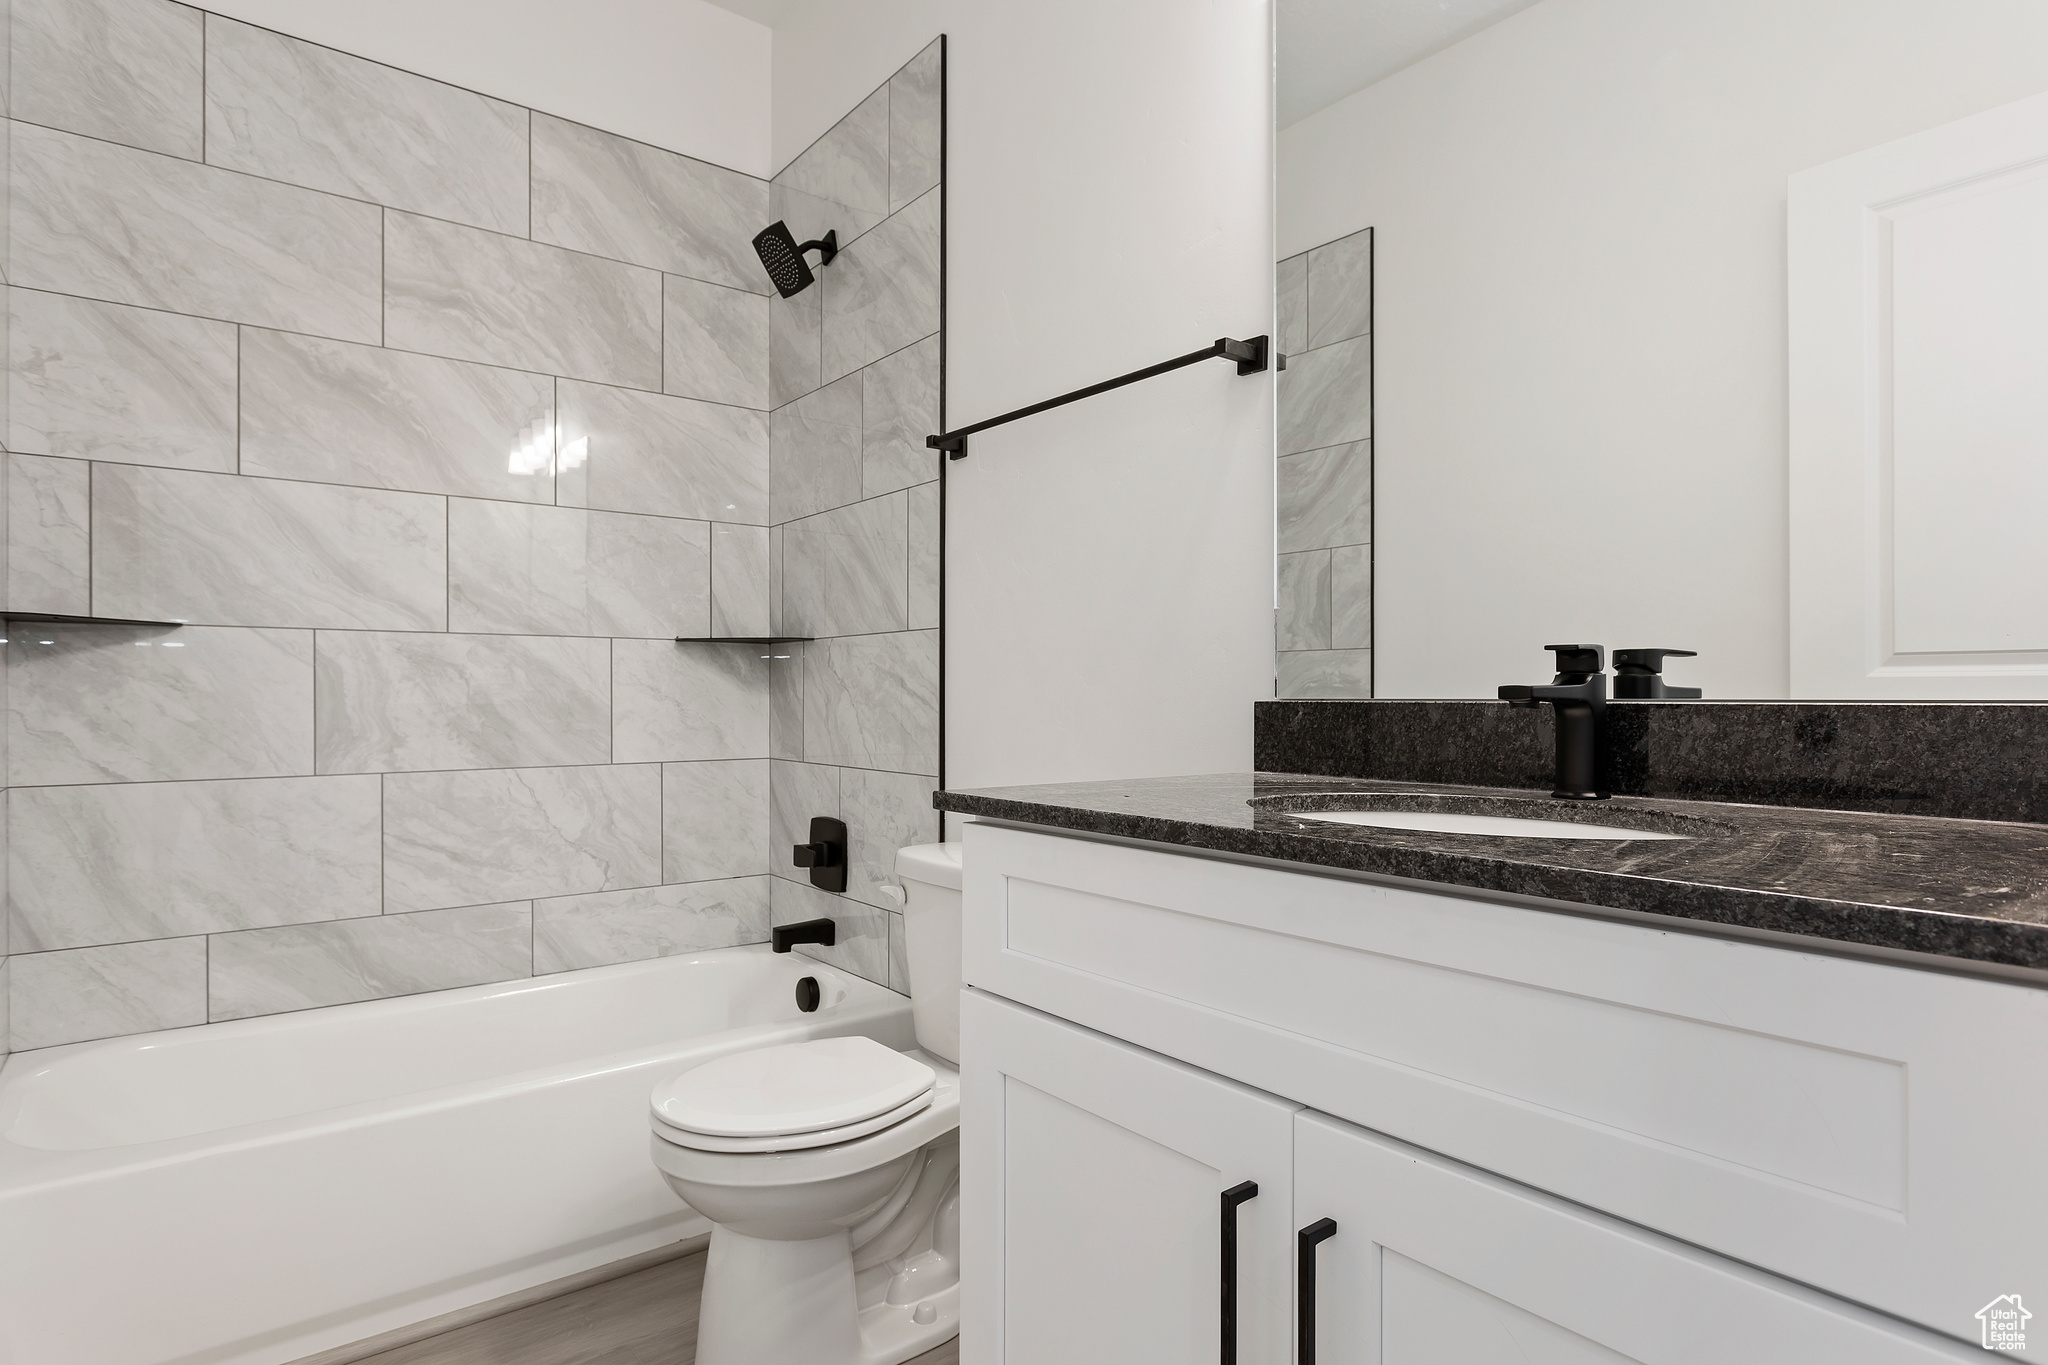 Full bathroom featuring tiled shower / bath, vanity, hardwood / wood-style flooring, and toilet